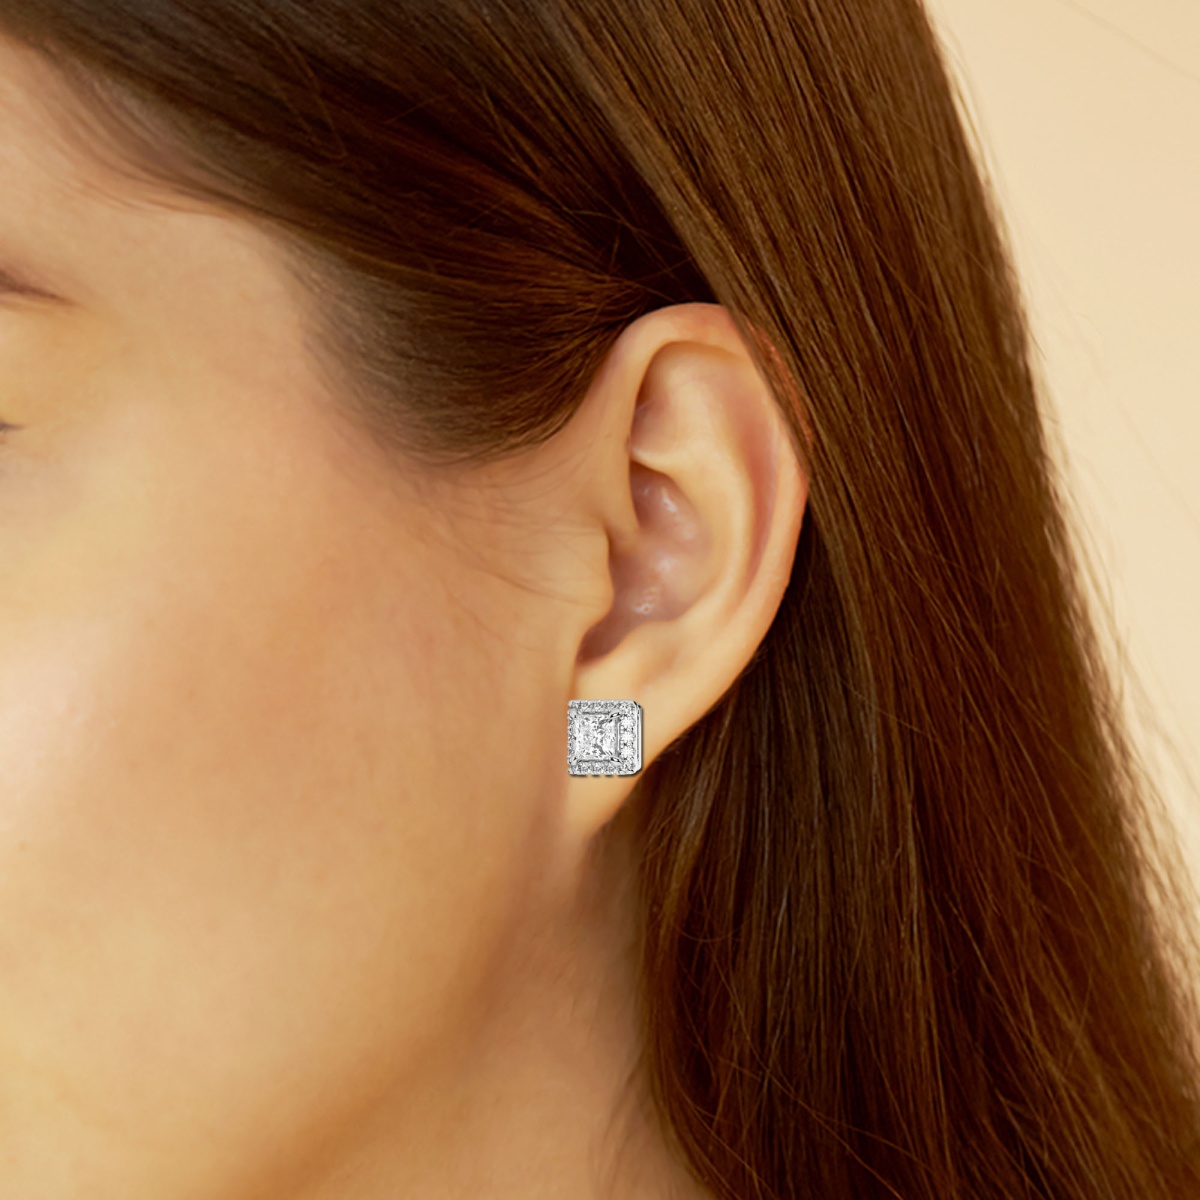 2 3/8 ctw Princess Lab Grown Diamond Halo Certified Stud Earrings